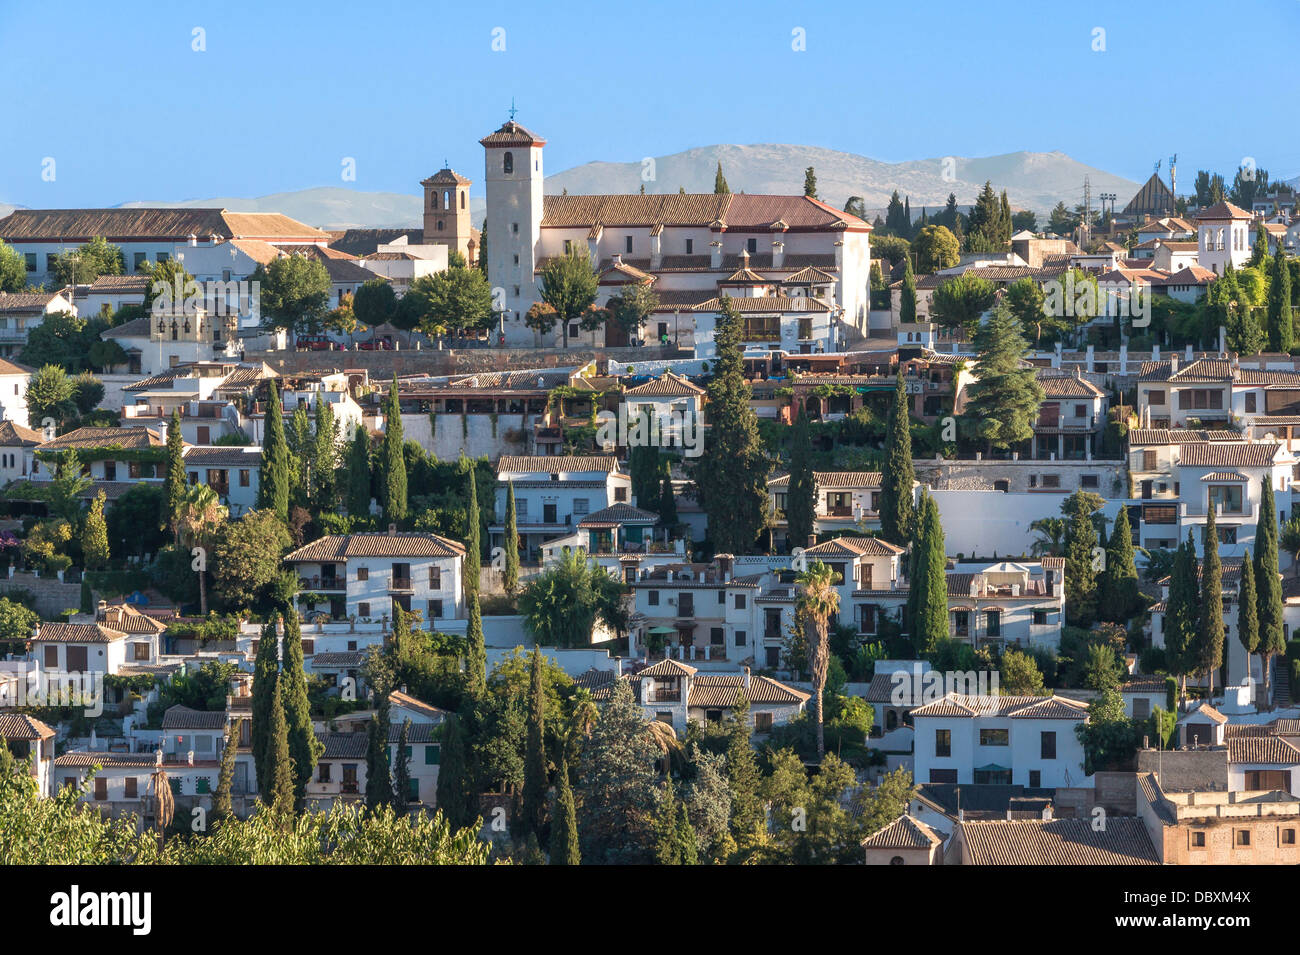 Church and mirador San Nicolas, overlooking the Albayzin neighborhood, seen from Alhambra, Granada, Spain. Stock Photo